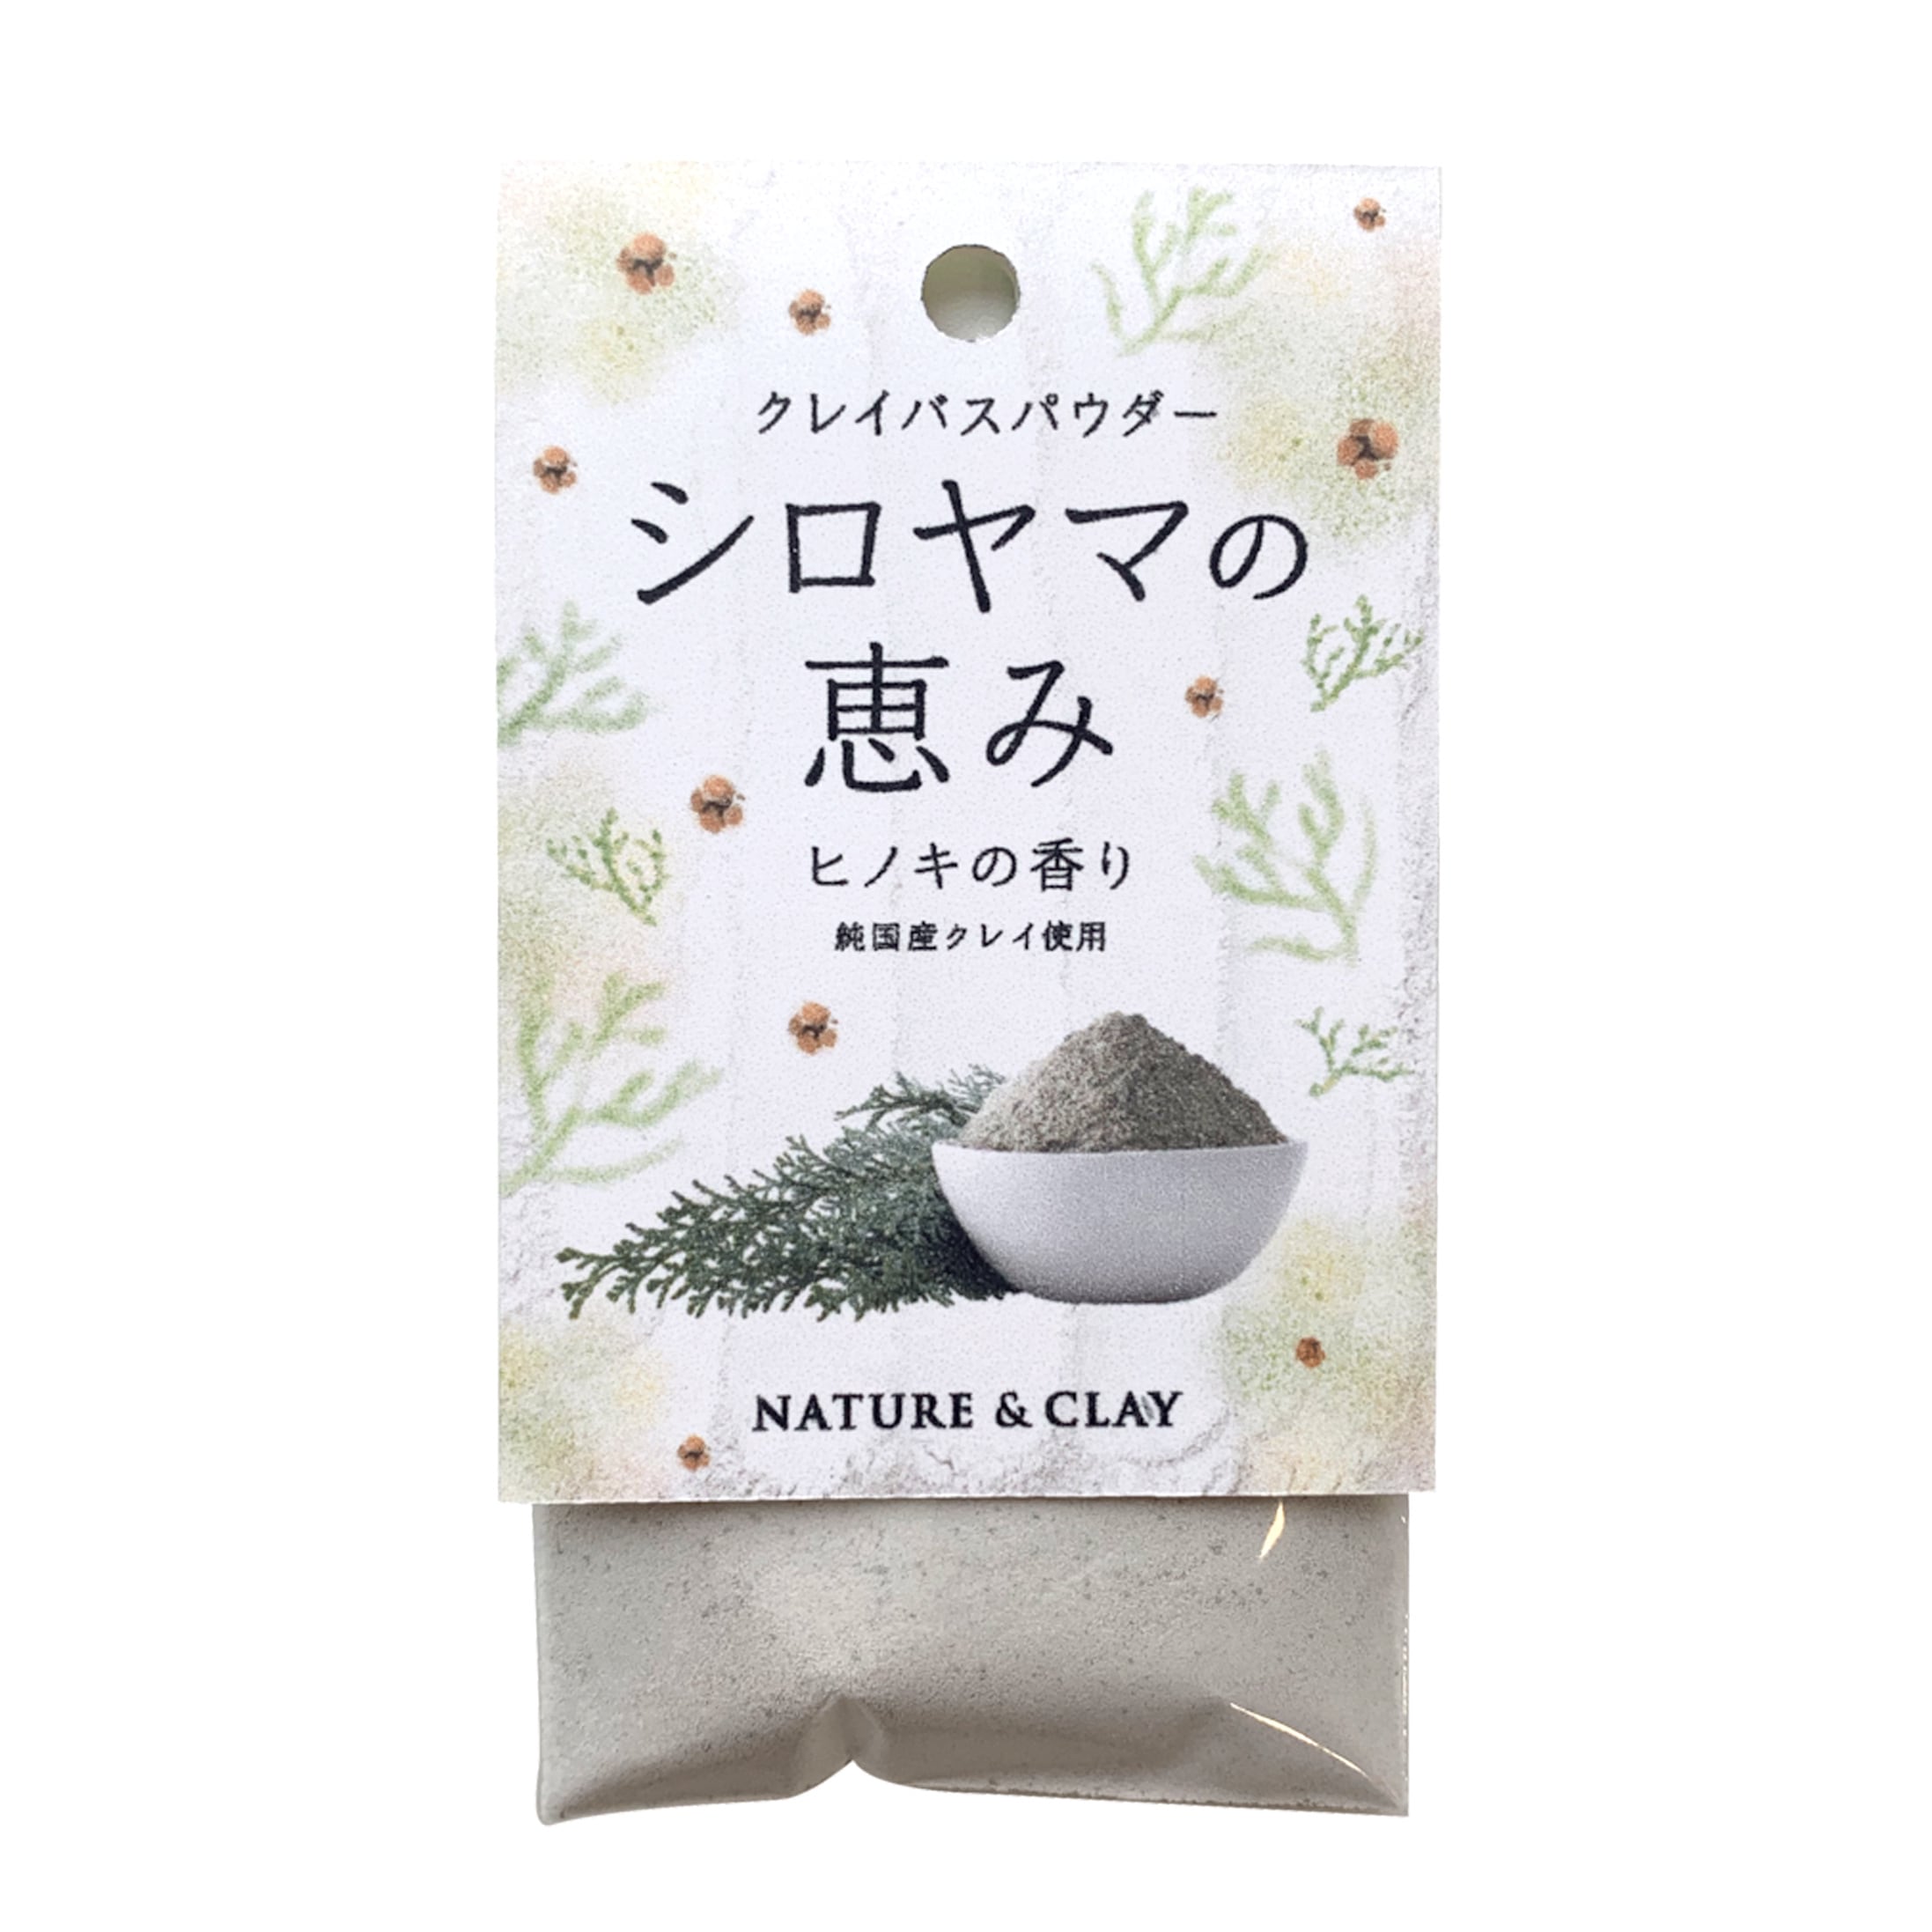 NATURE＆CLAY クレイ入浴剤 15g シロヤマの恵み ヒノキの香り 乳白色のお湯